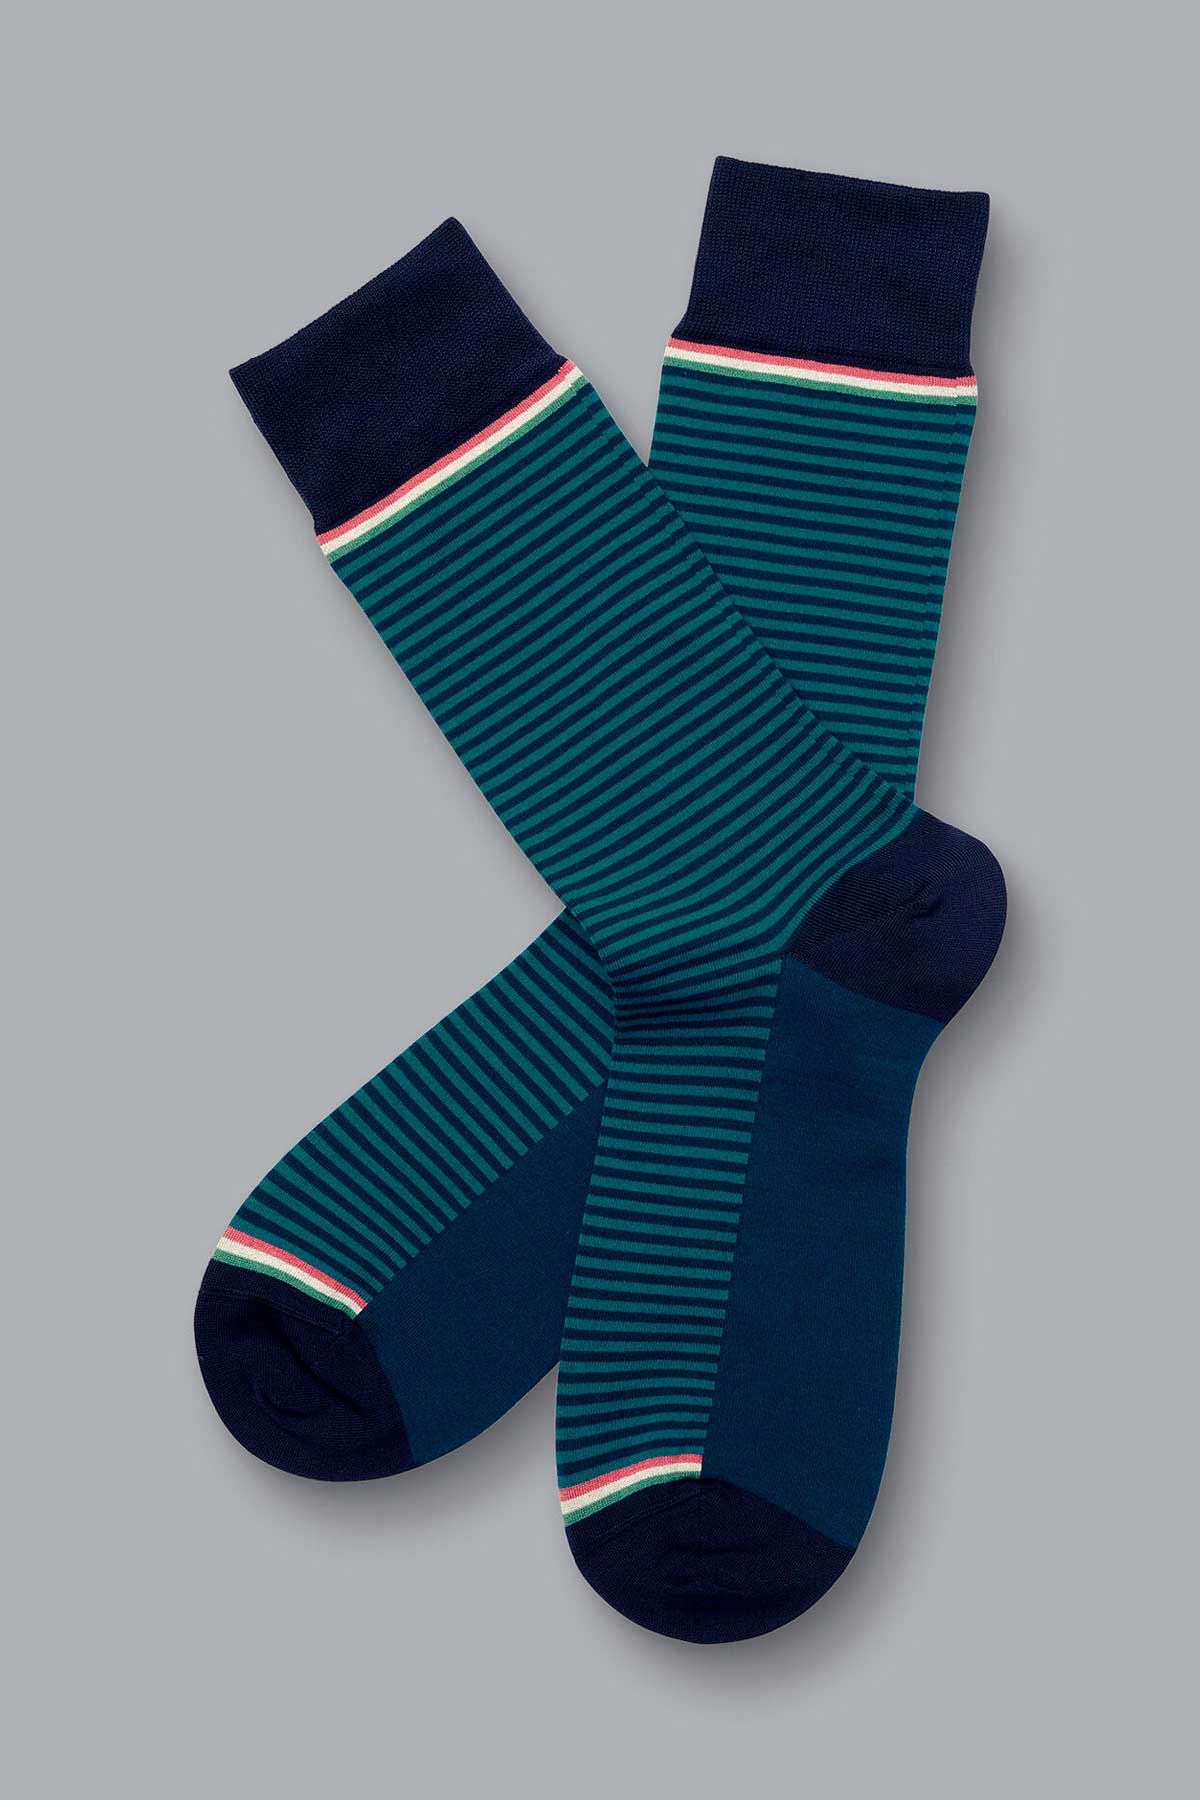 CTM Men's Big and Tall Striped Tube Socks (4 Pairs), Black, Red, Royal  Blue, Green